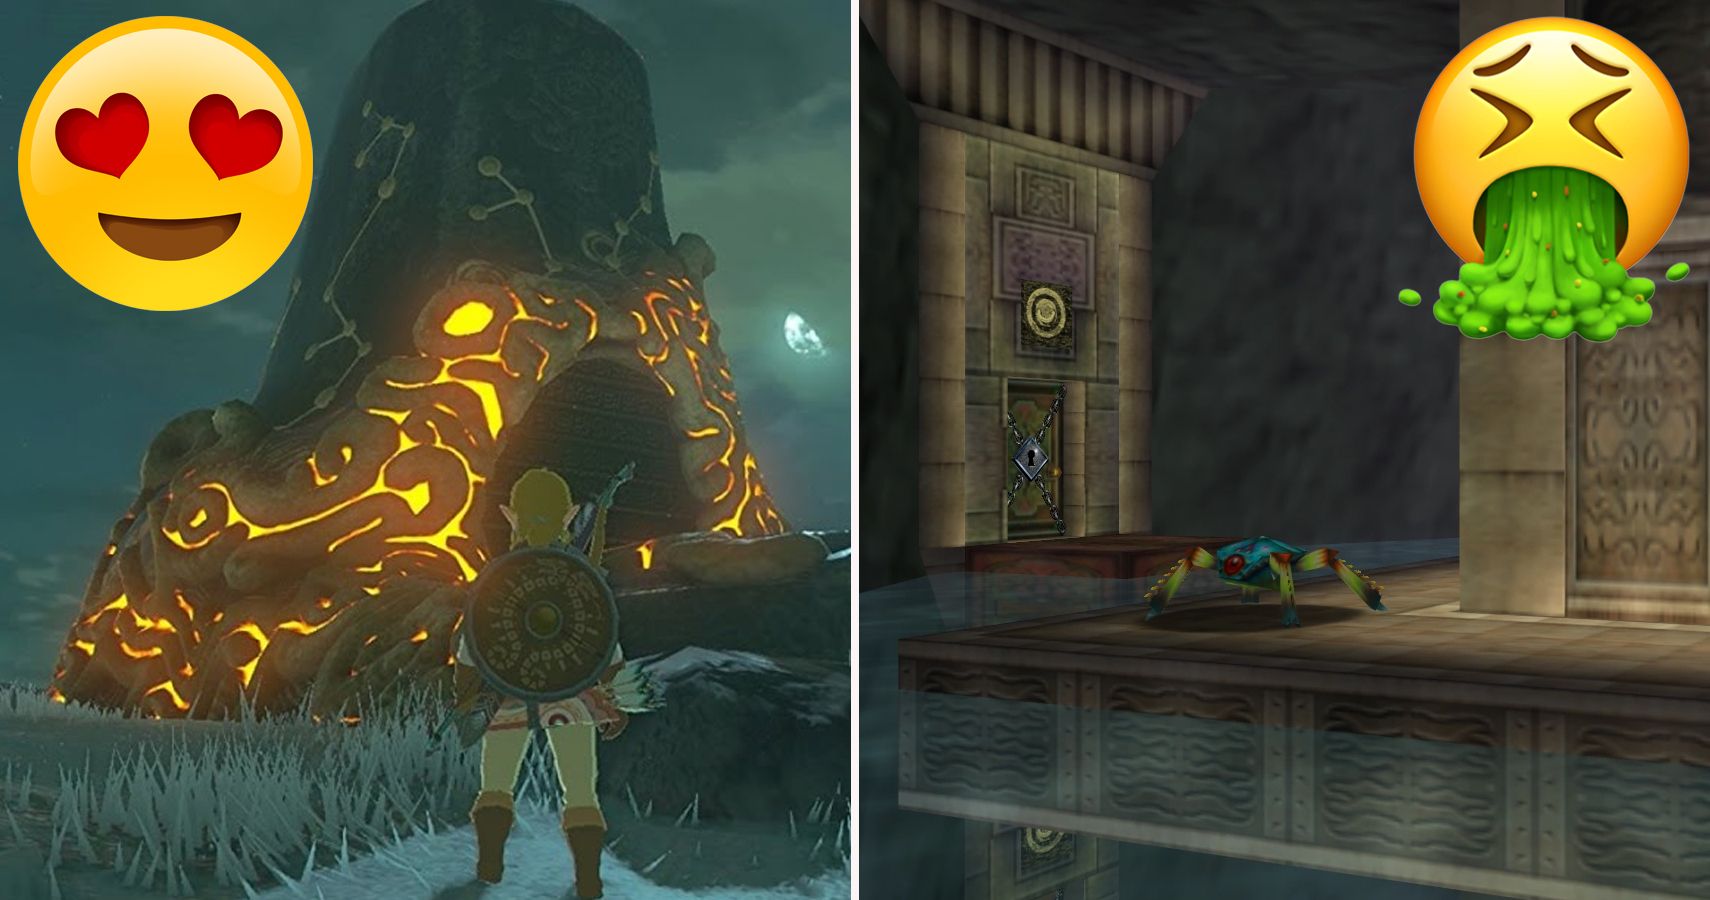 Ocarina of Time Walkthrough – Bottom of The Well – Zelda Dungeon